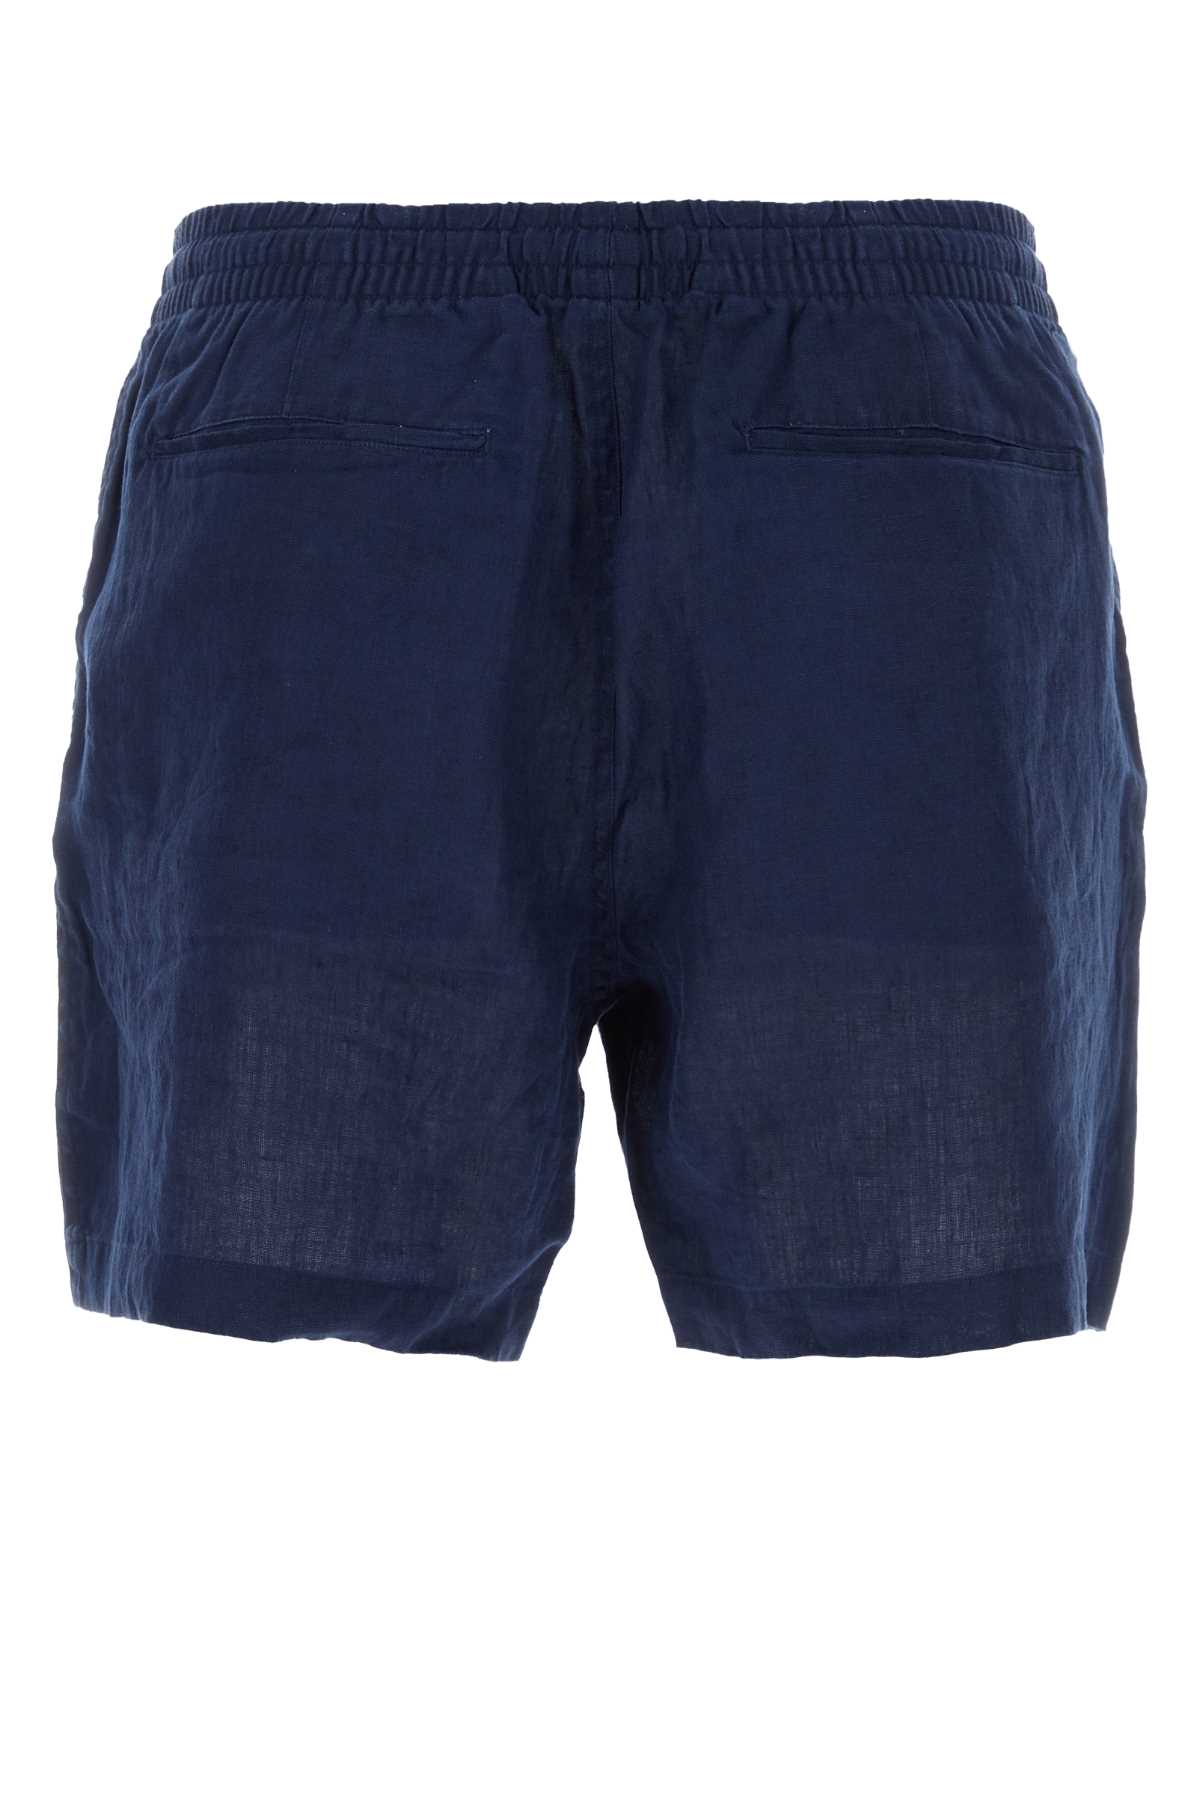 Shop Polo Ralph Lauren Navy Blue Linen Bermuda Shorts